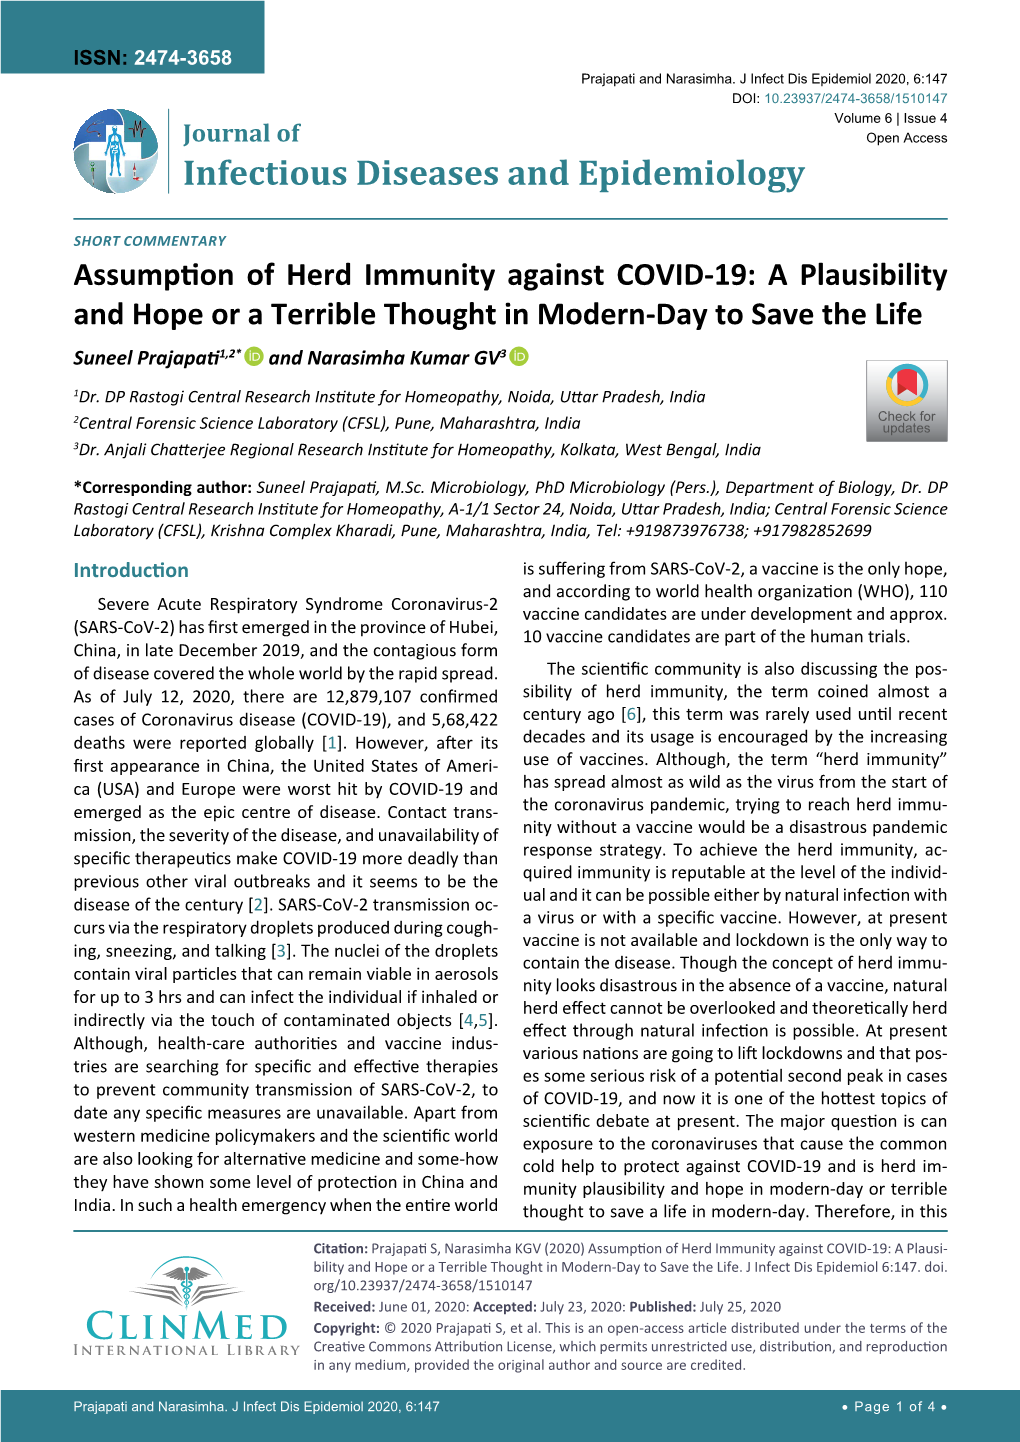 Assumption of Herd Immunity Against COVID-19